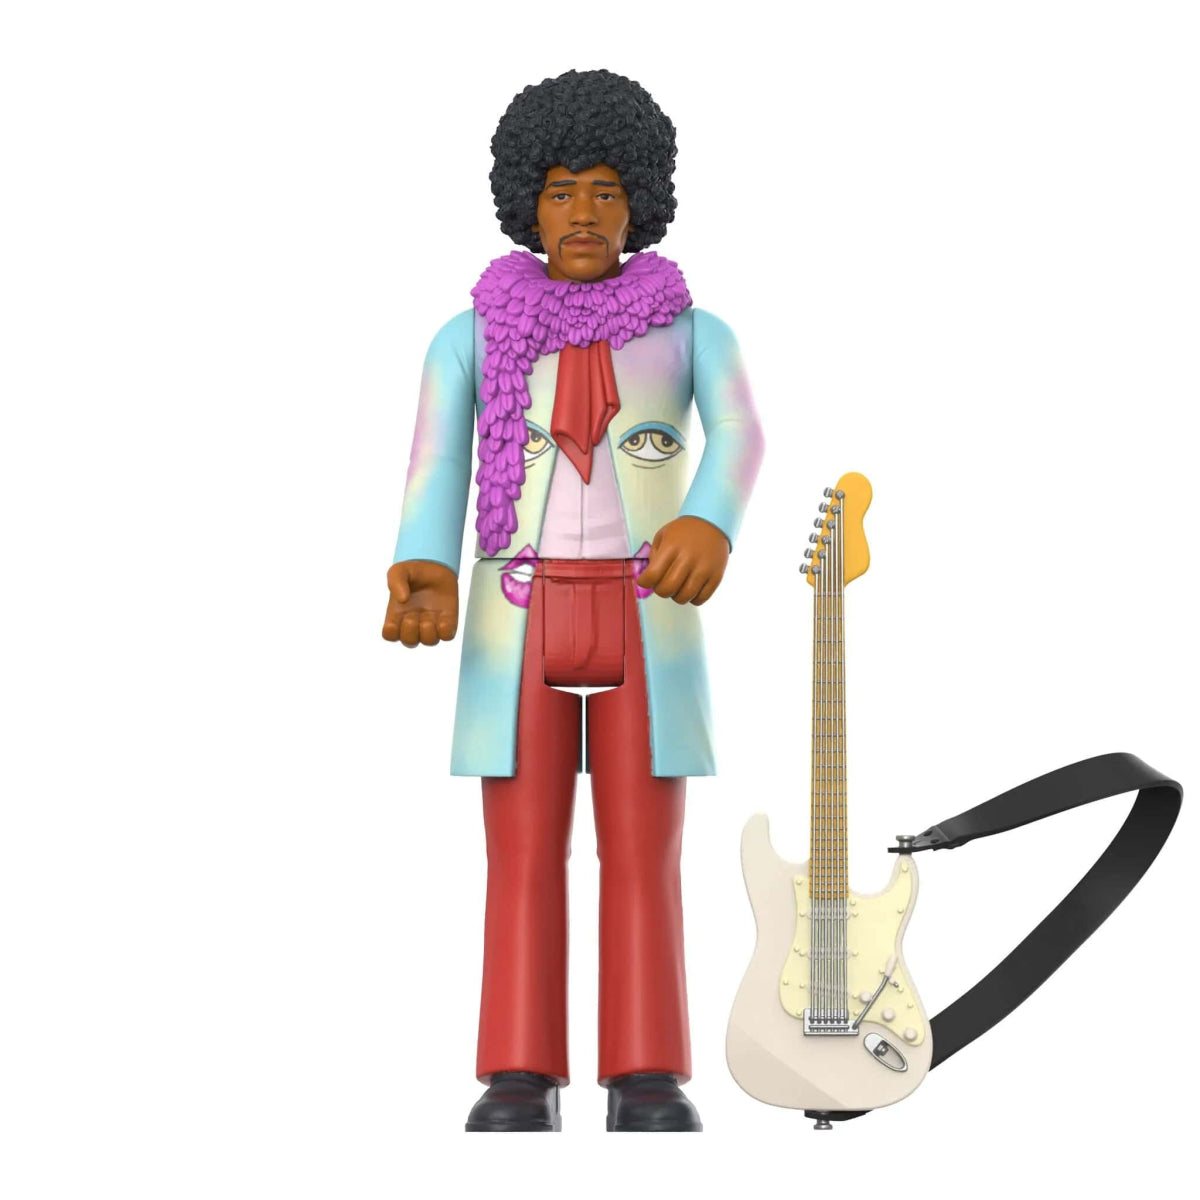 Jimi Hendrix ReAction Figure - Jimi Hendrix (Are You Experienced) - Super 7 - Indie Vinyl Den